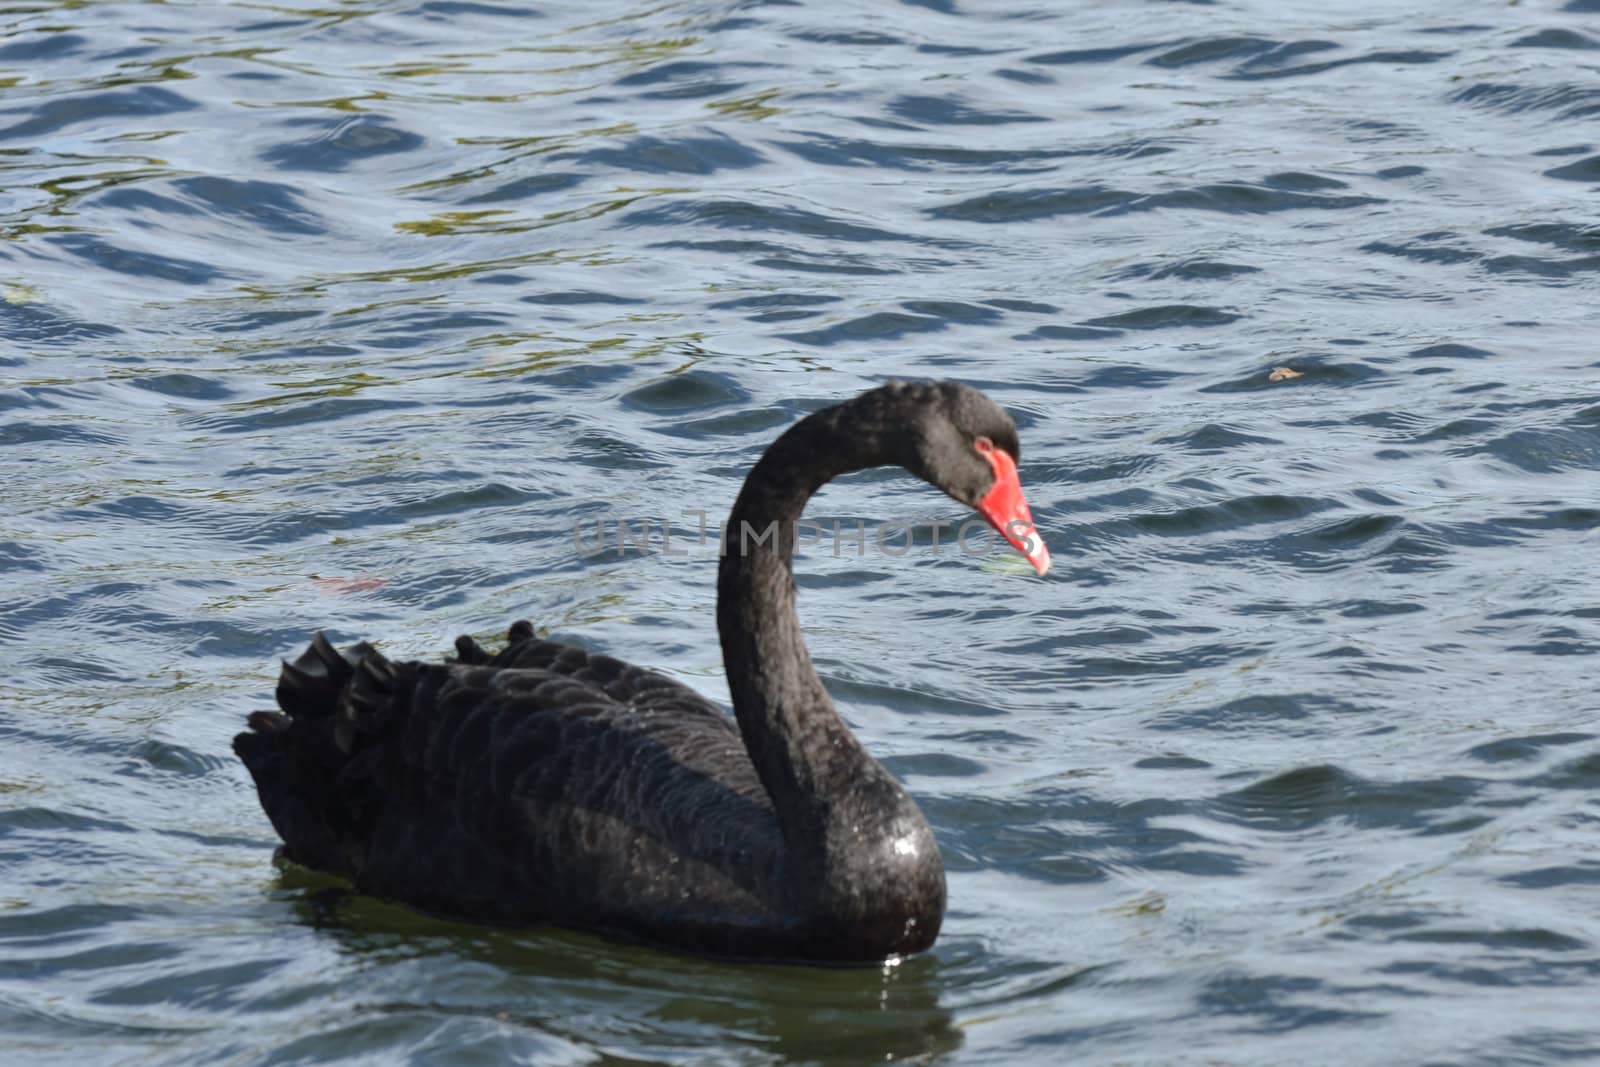 Black swan on water by pauws99